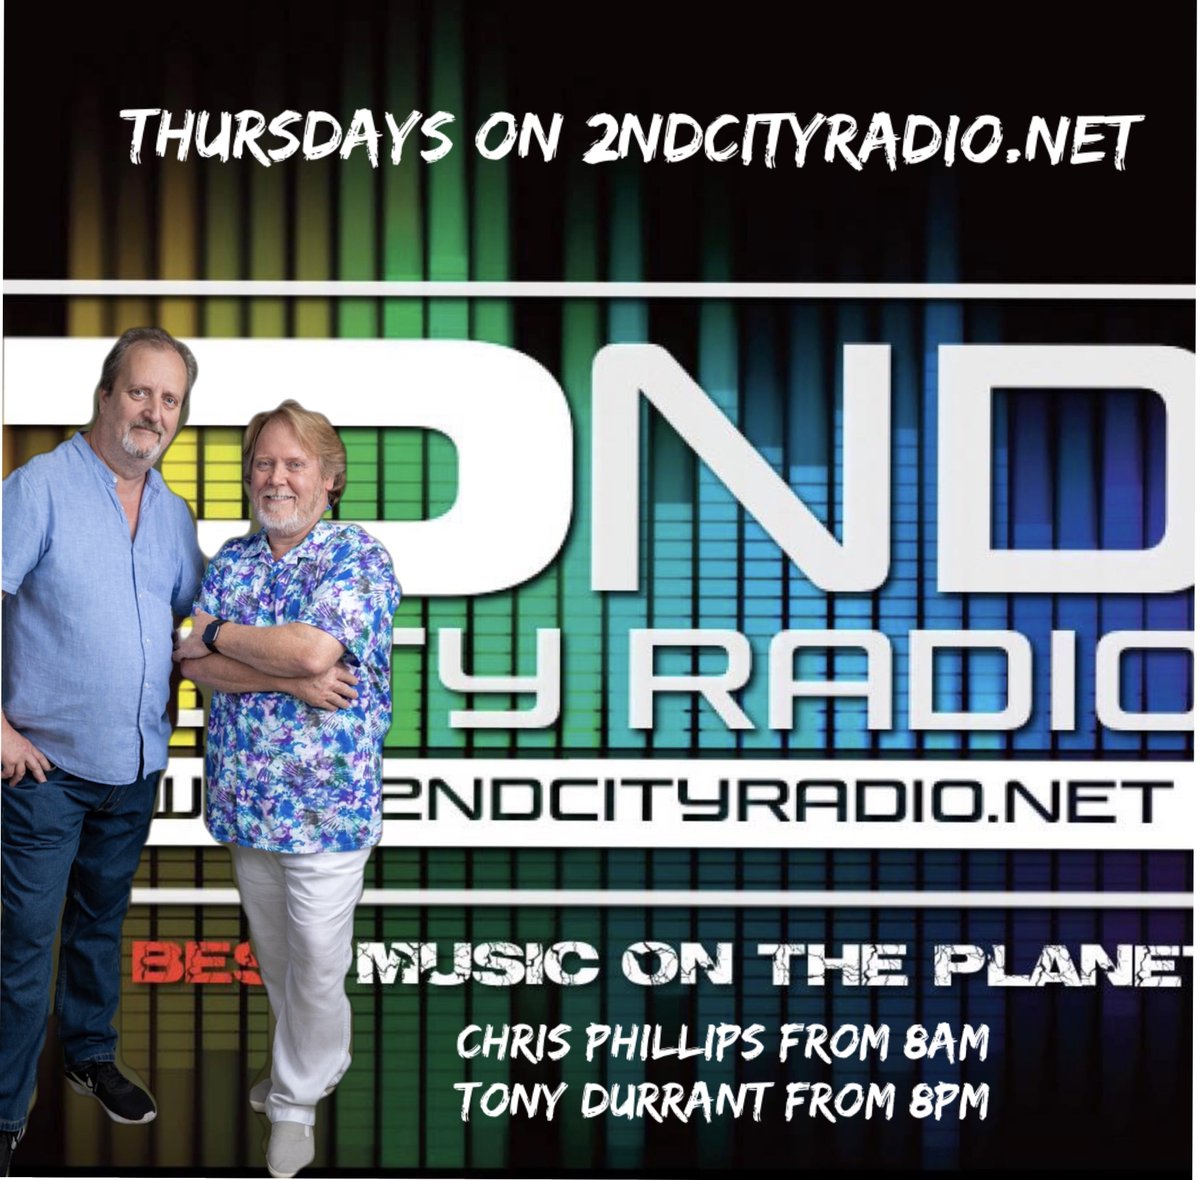 Live now with Chris Phillips on 2ndcityradio.net @thefreds @djdurrant @mandyeap @theatreluvvie @holisticentre1 @kittiekat09 @secondcityradio